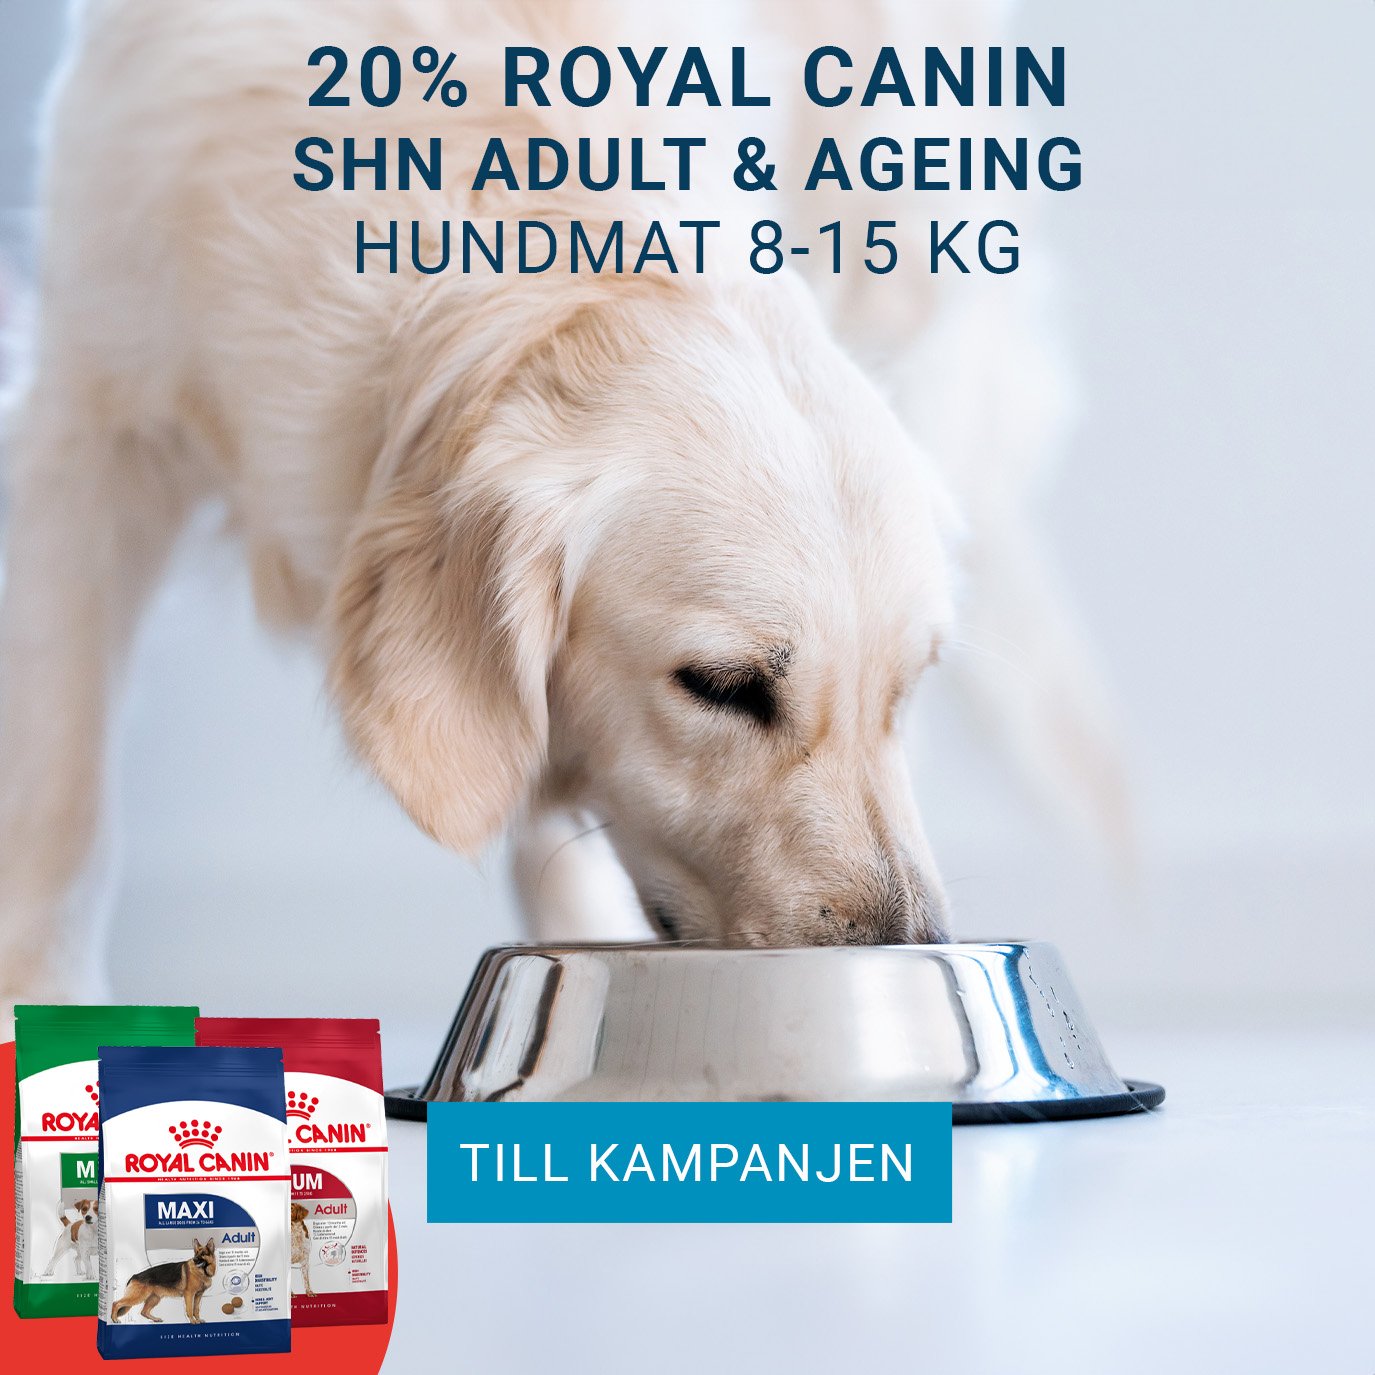 Kampanj Royal Canin